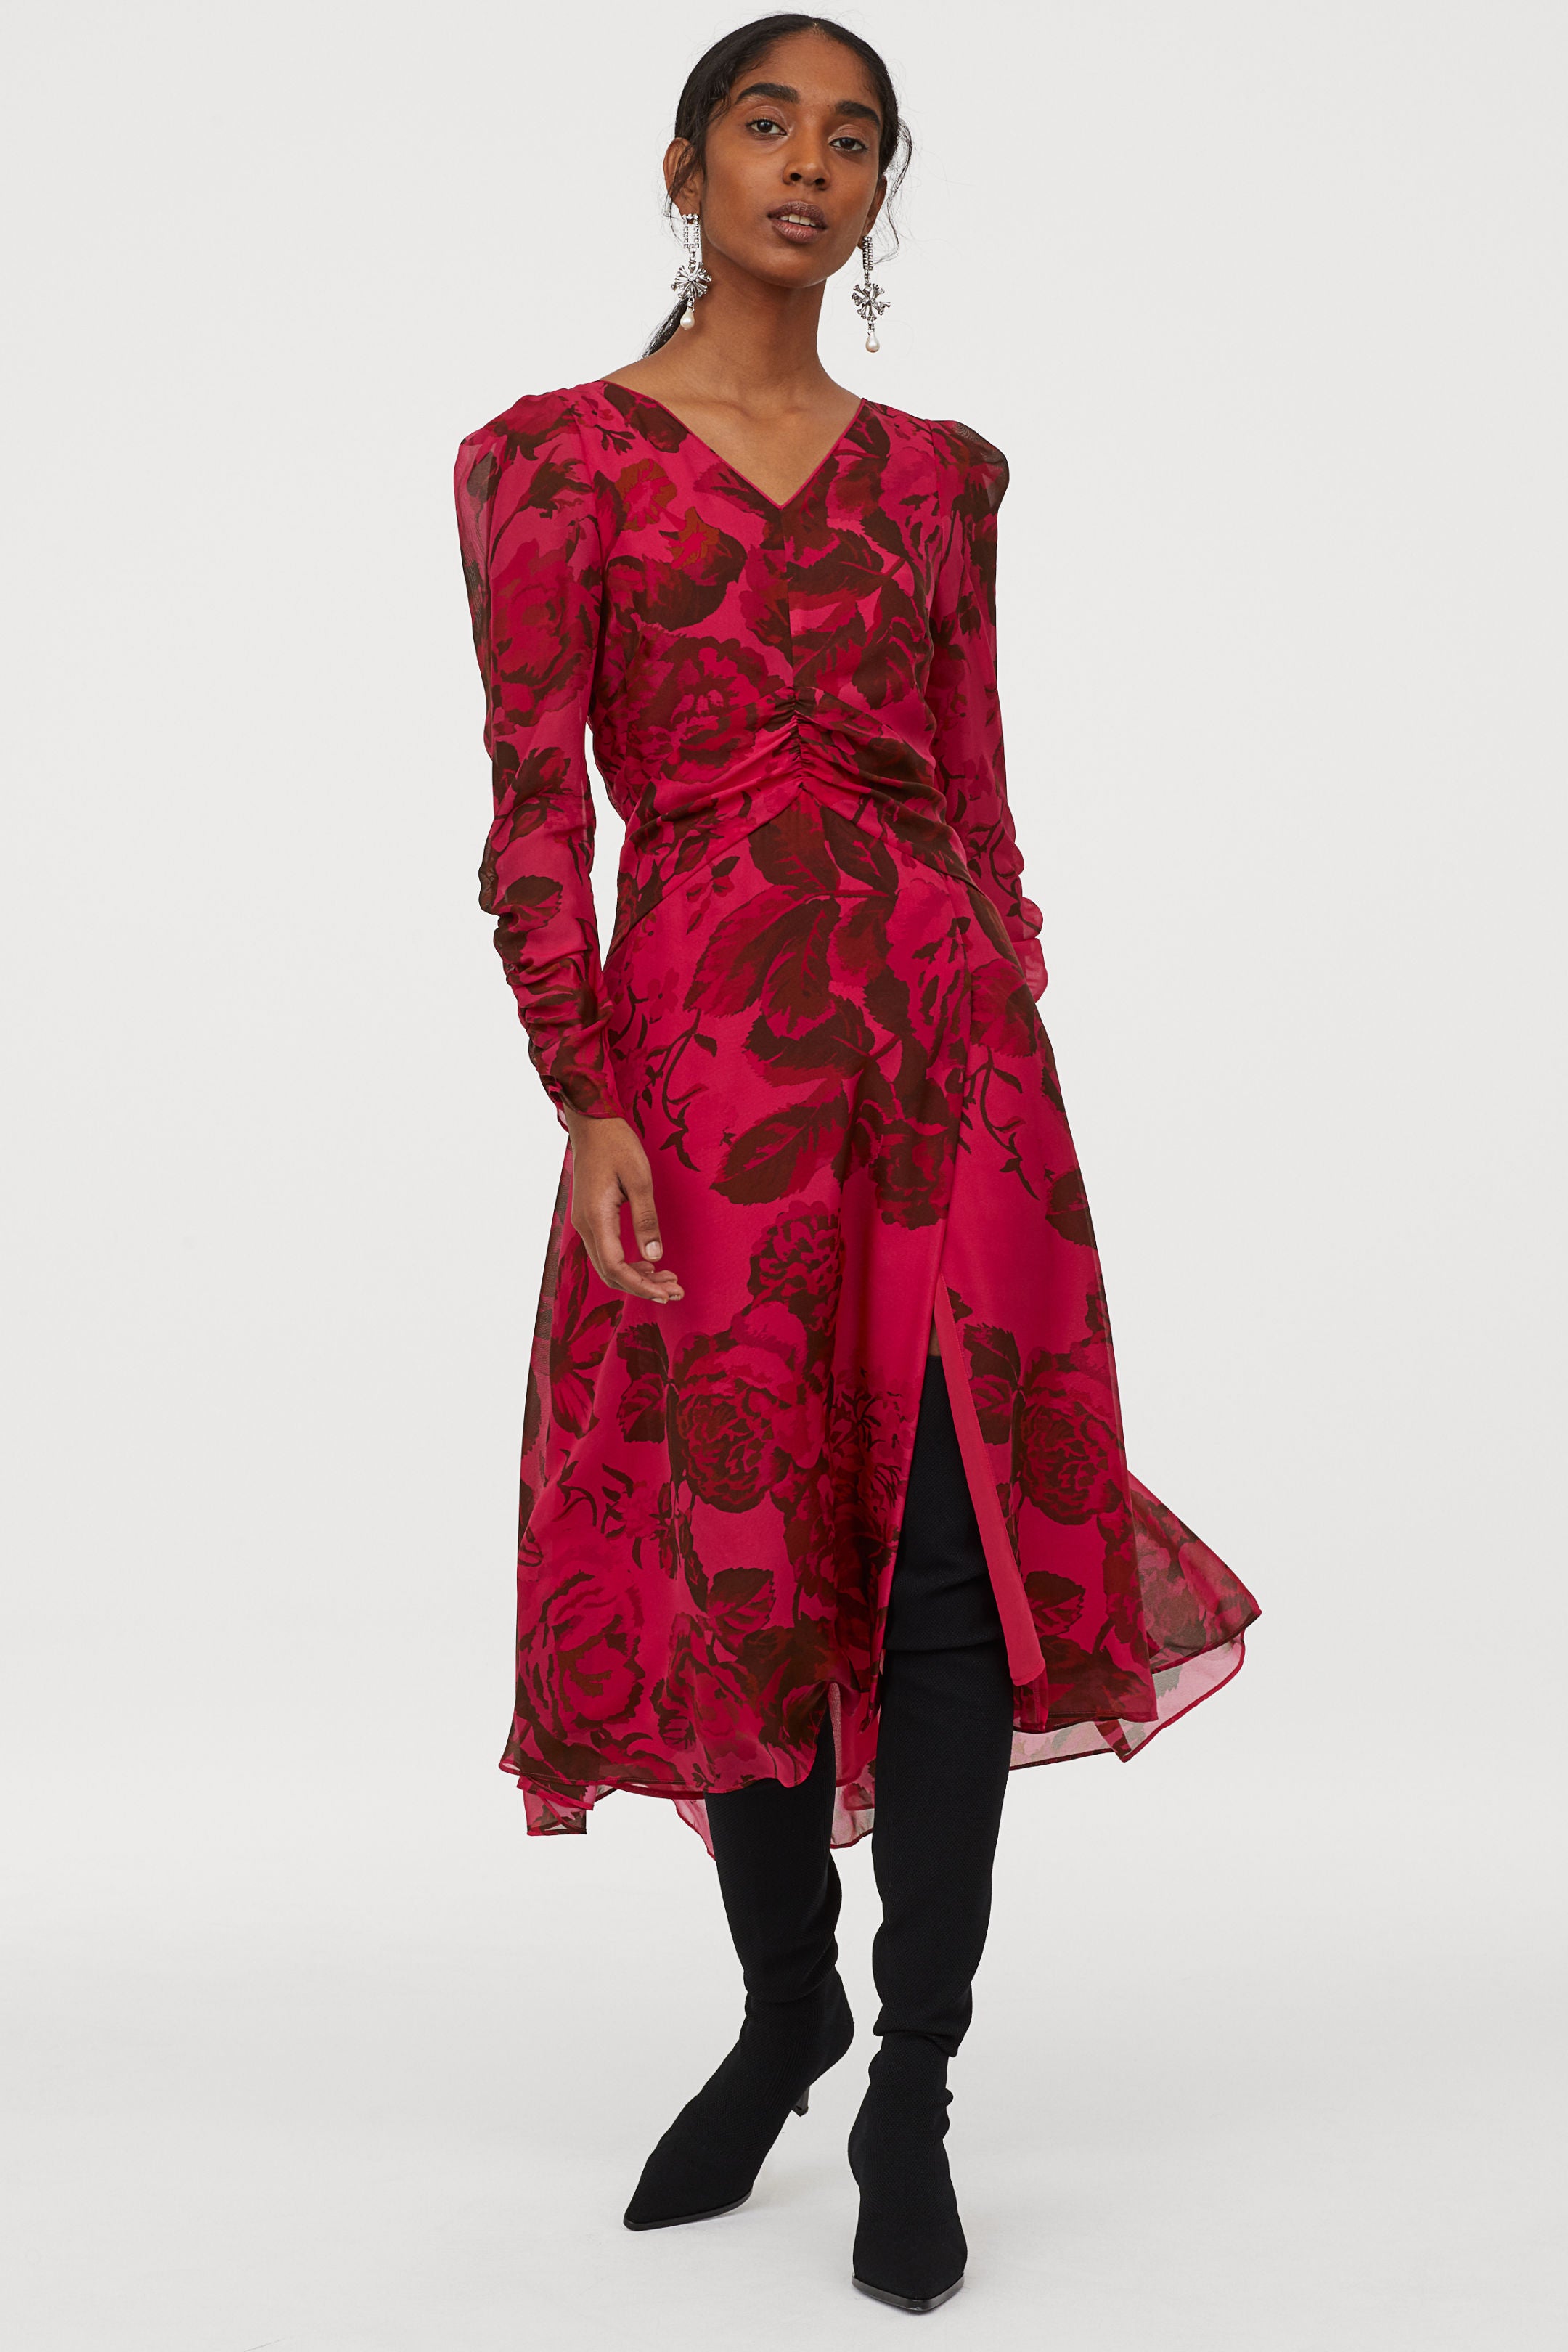 H&M + Patterned Silk Dress